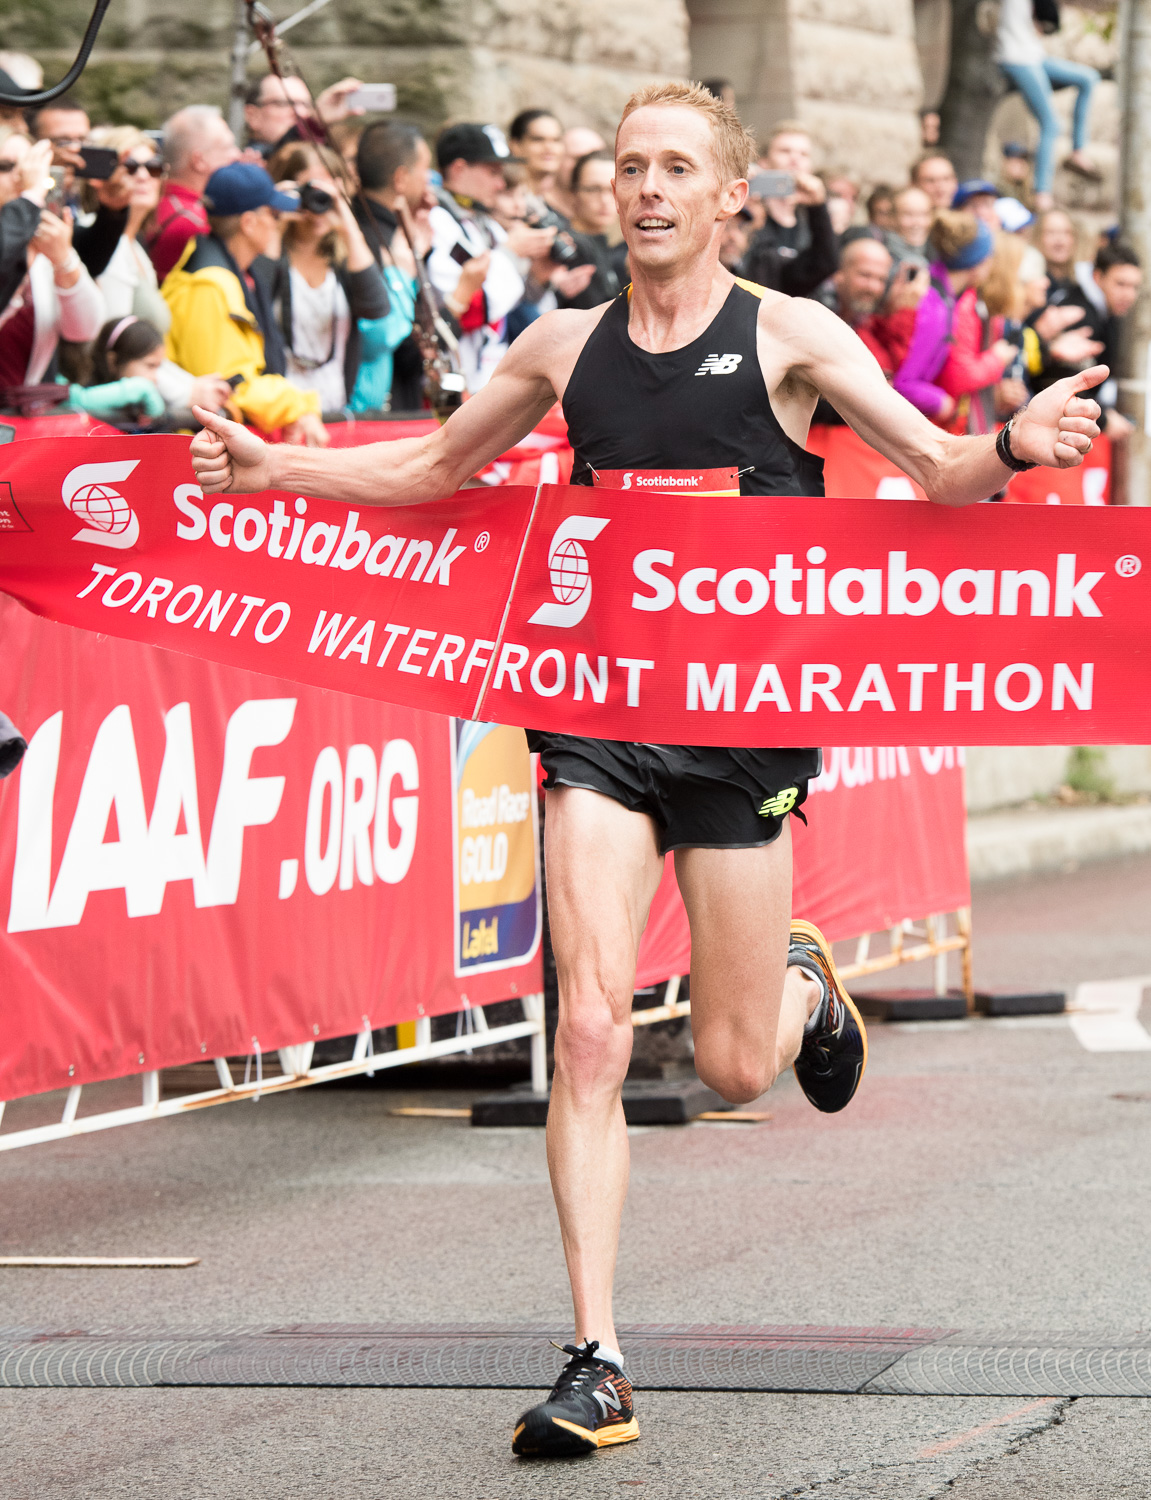 Olympian Eric Gillis wins Athletics Canada's Canadian Marathon Championships at STWM 2016. Photo: Canada Running Series.